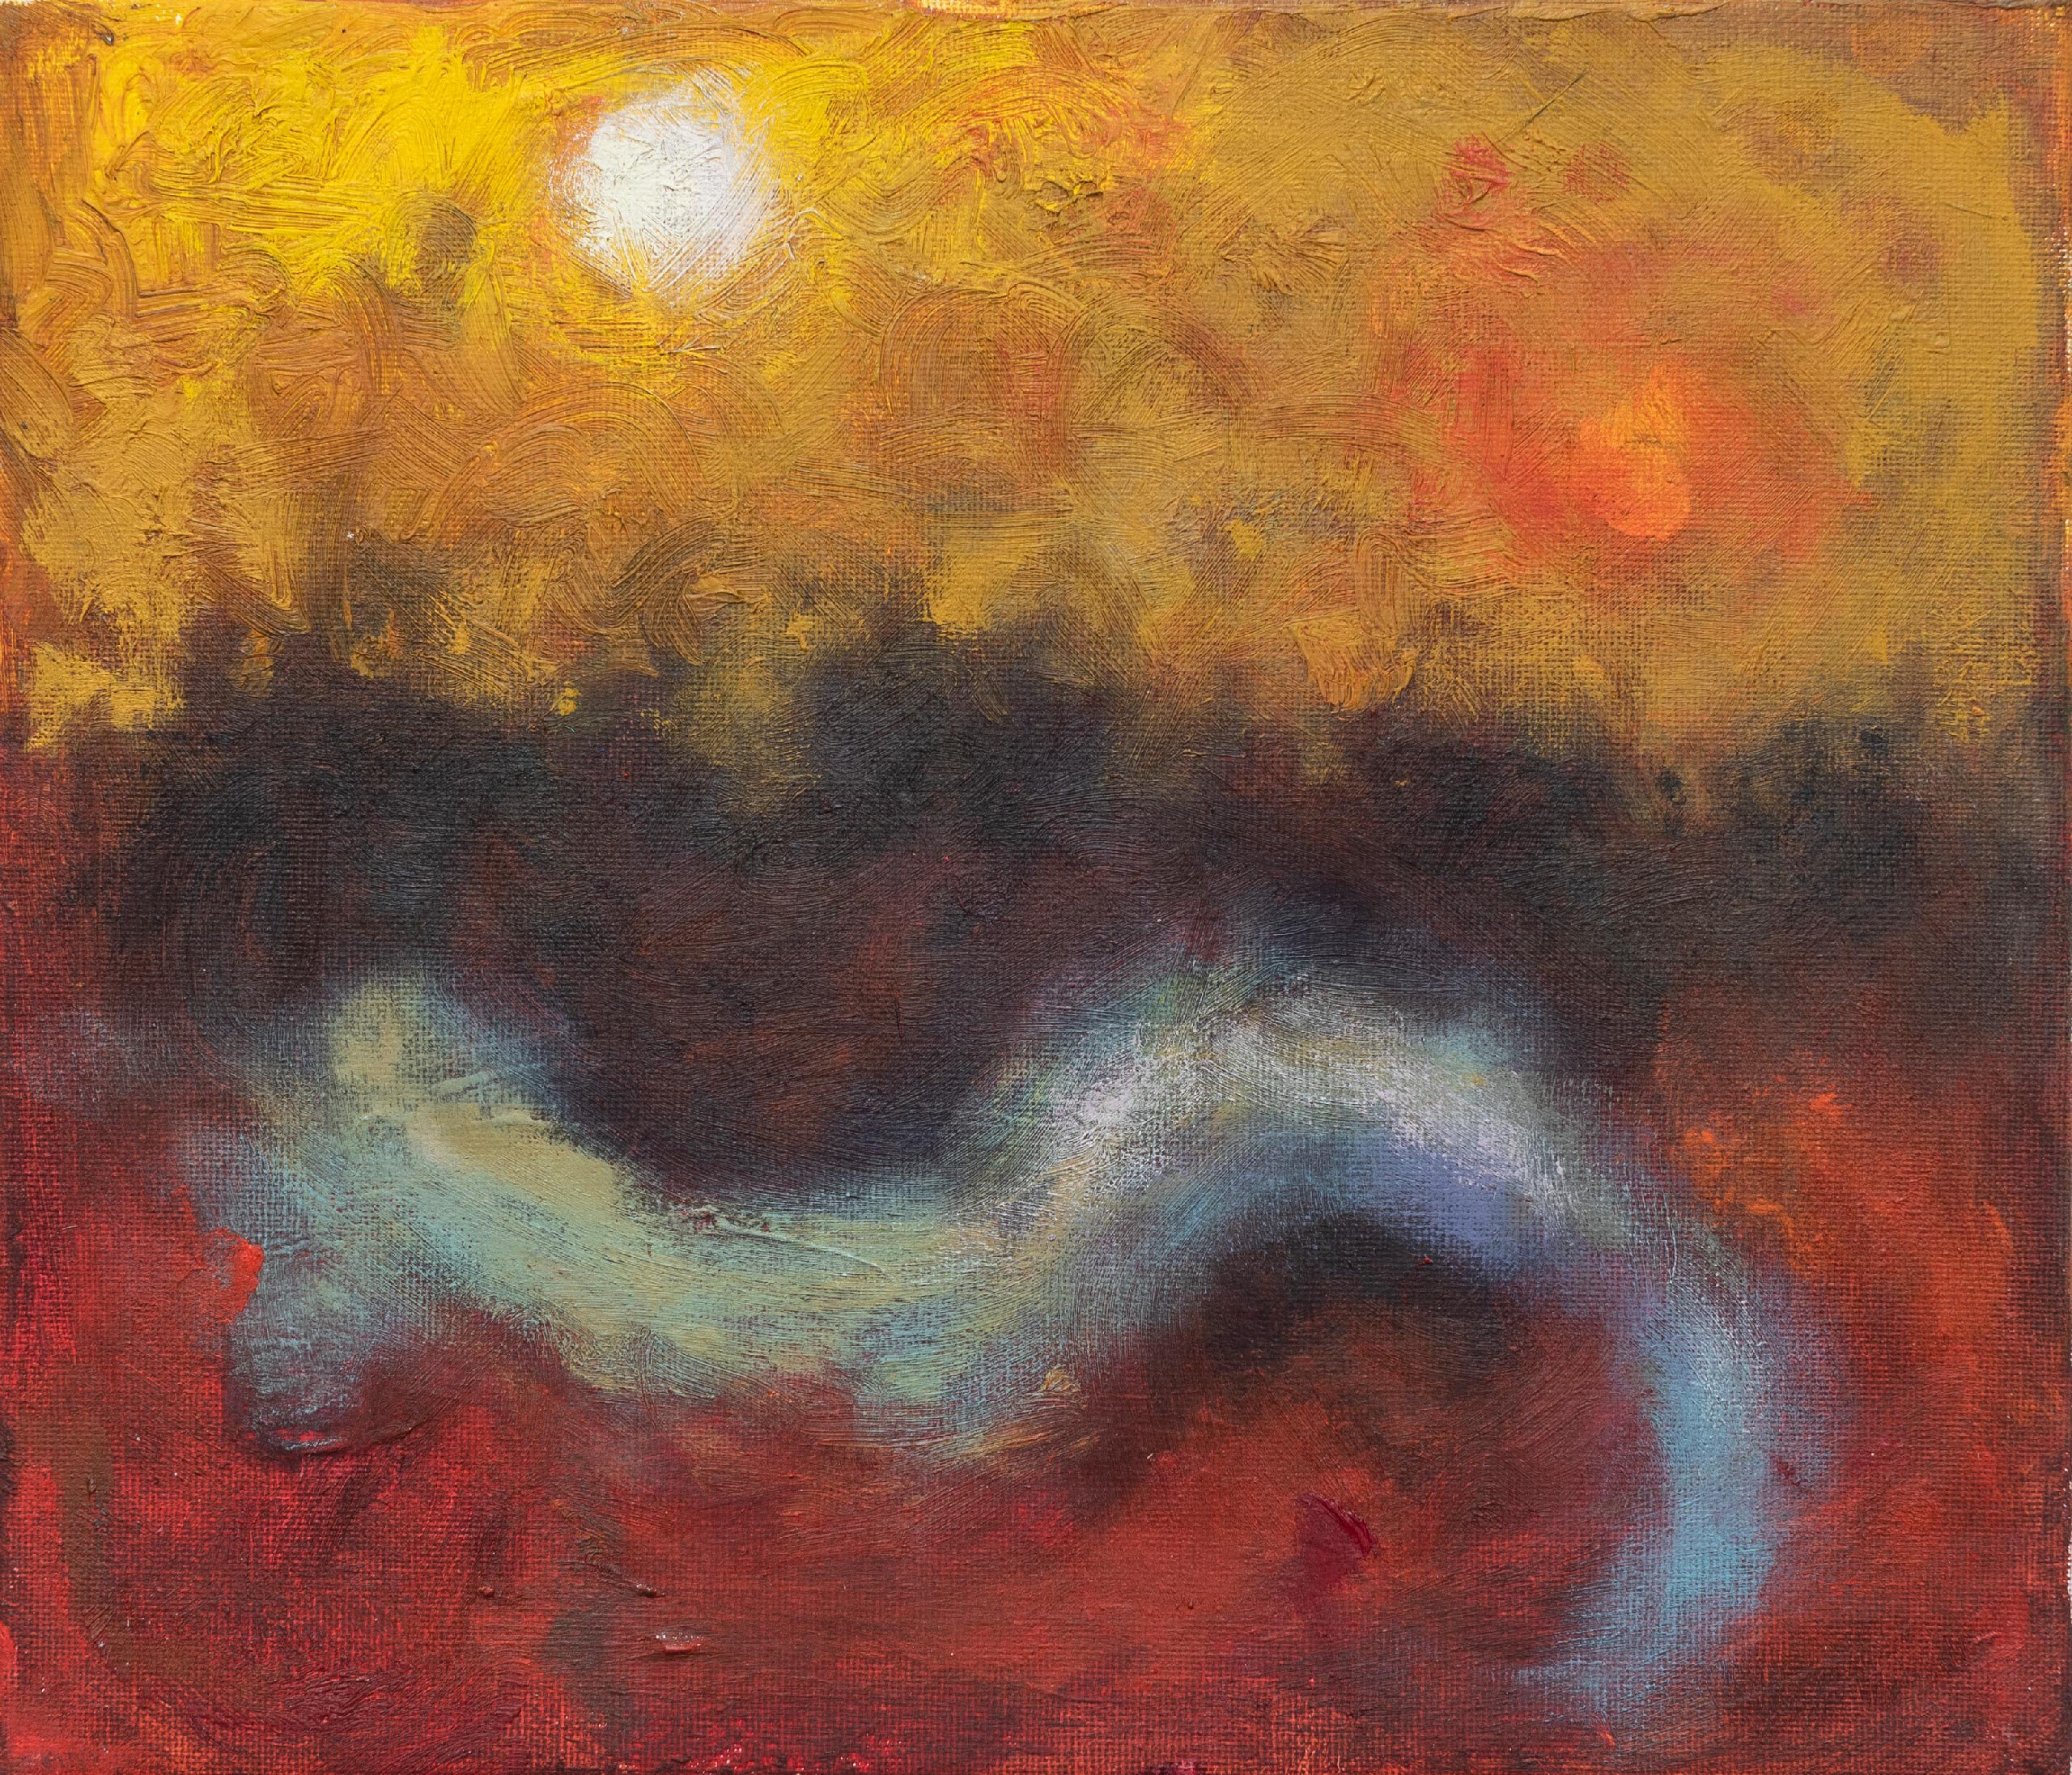 Triple Sun, Oil on canvas, 2020, 26 × 30 cm